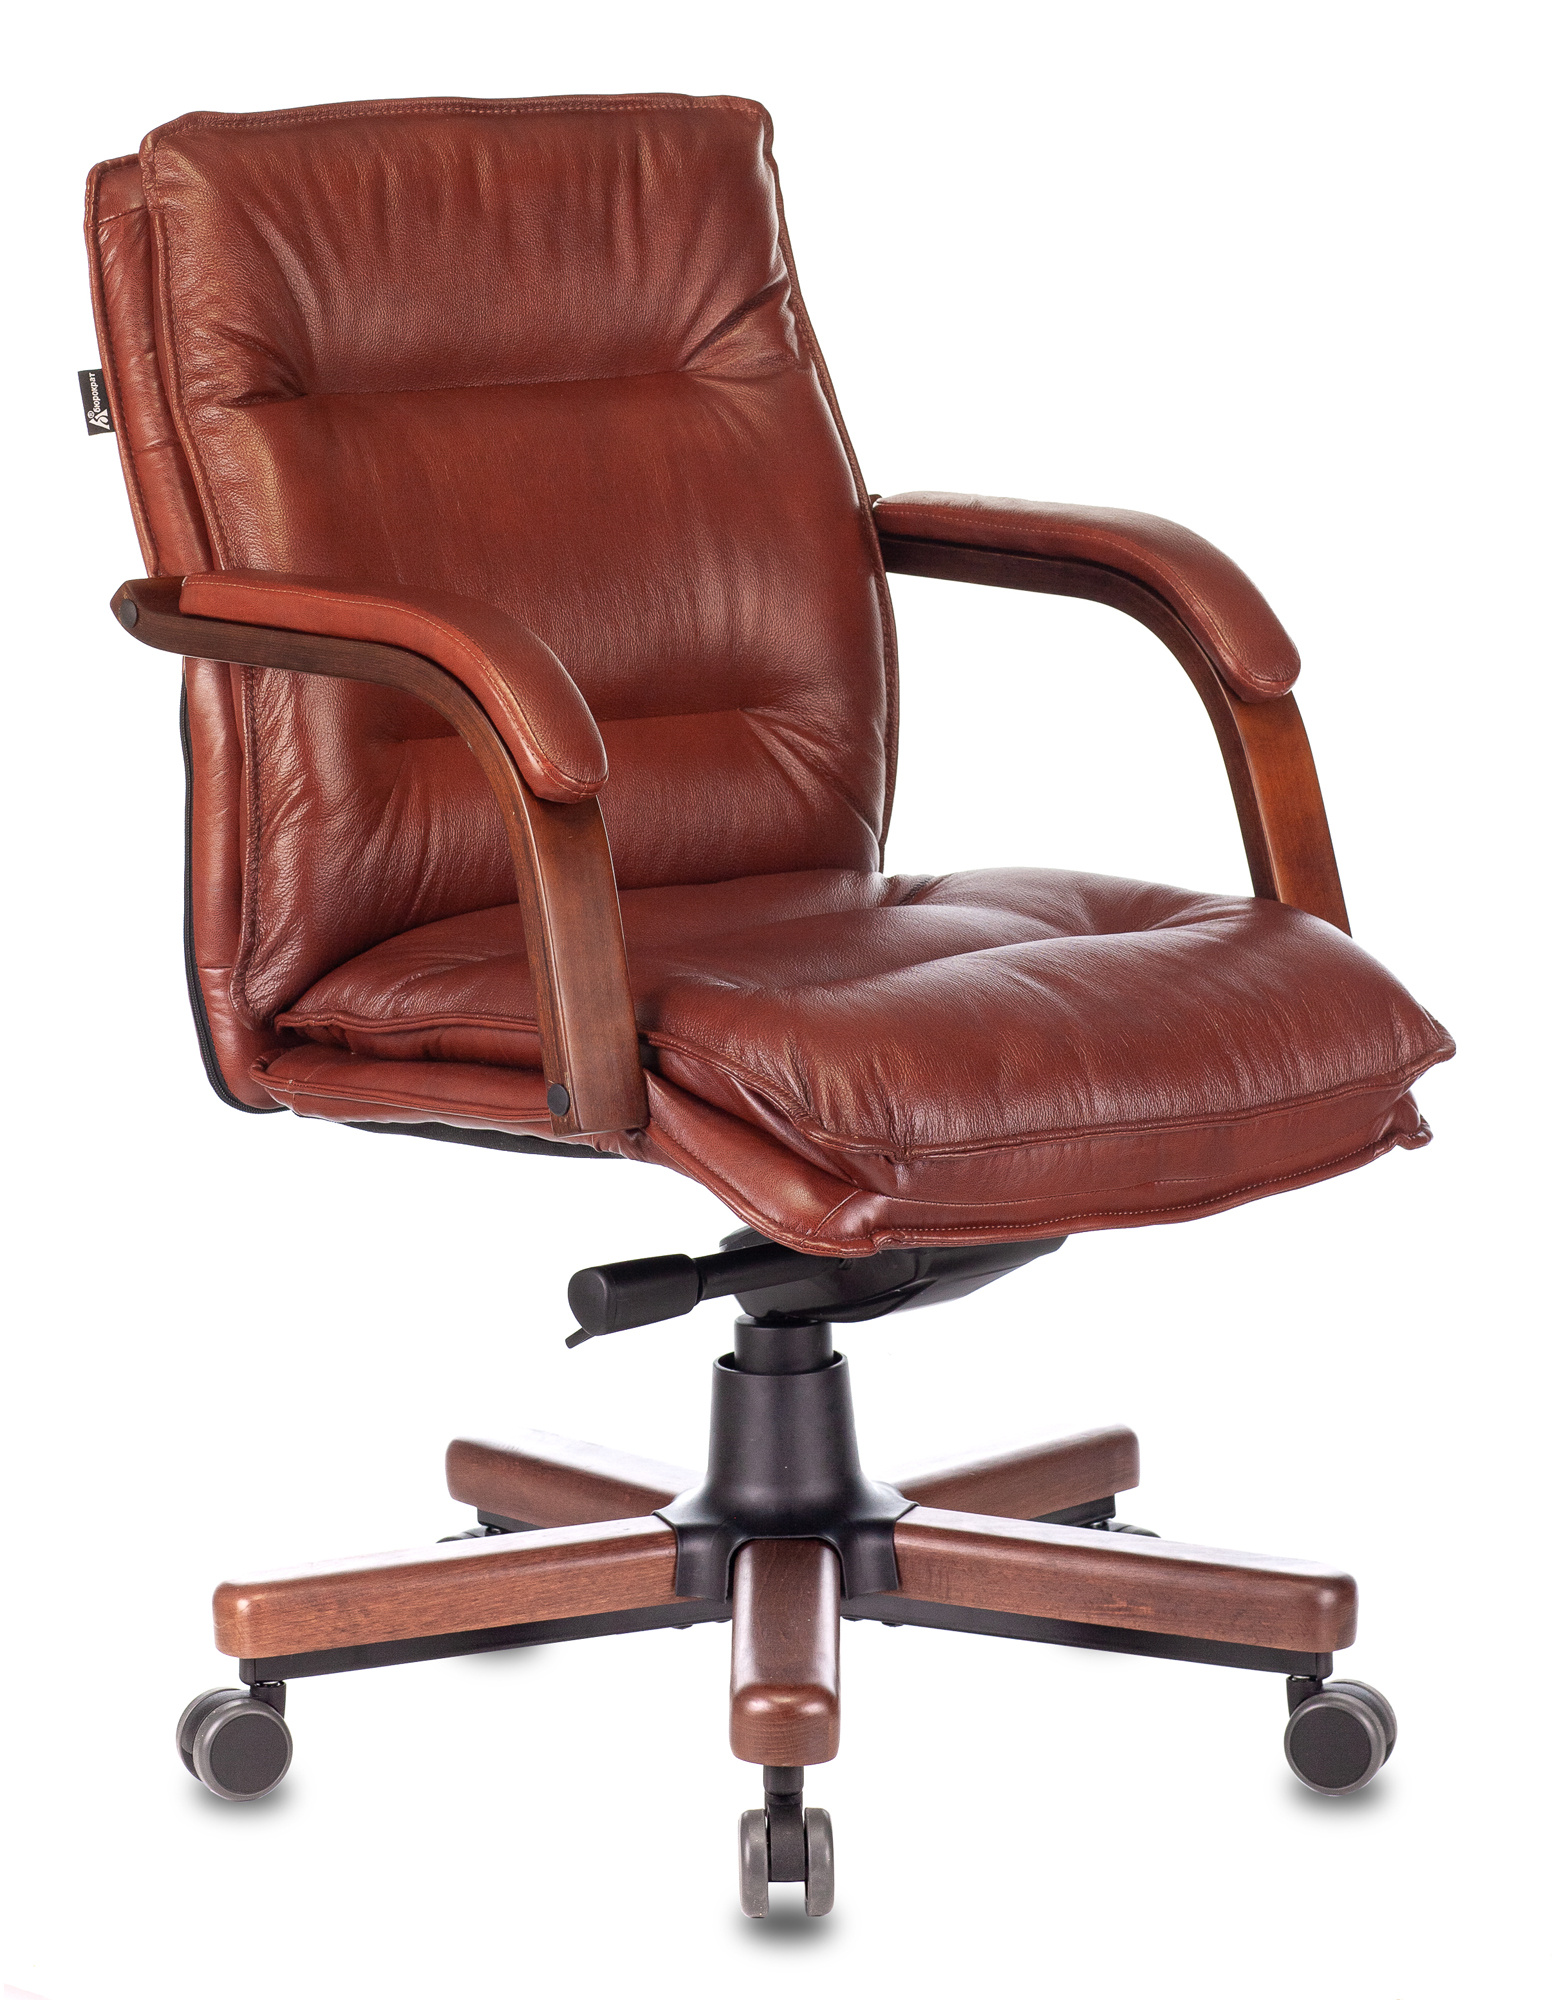 Кресло руководителя T-9927WALNUT-LOW светло-коричневый Leather Eichel кожа низк.спин. крестовина металл/дерево дерево